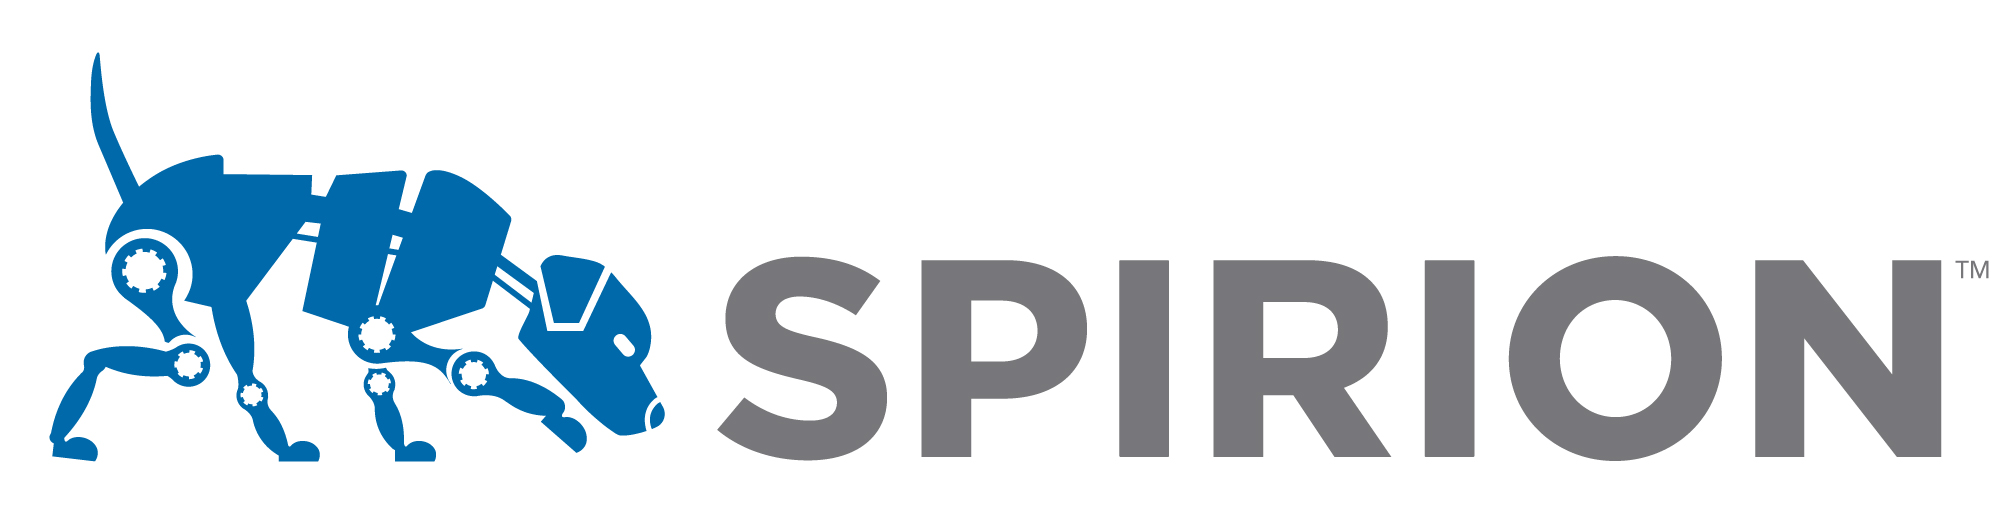 SPIRION-logo-color-2k.jpg